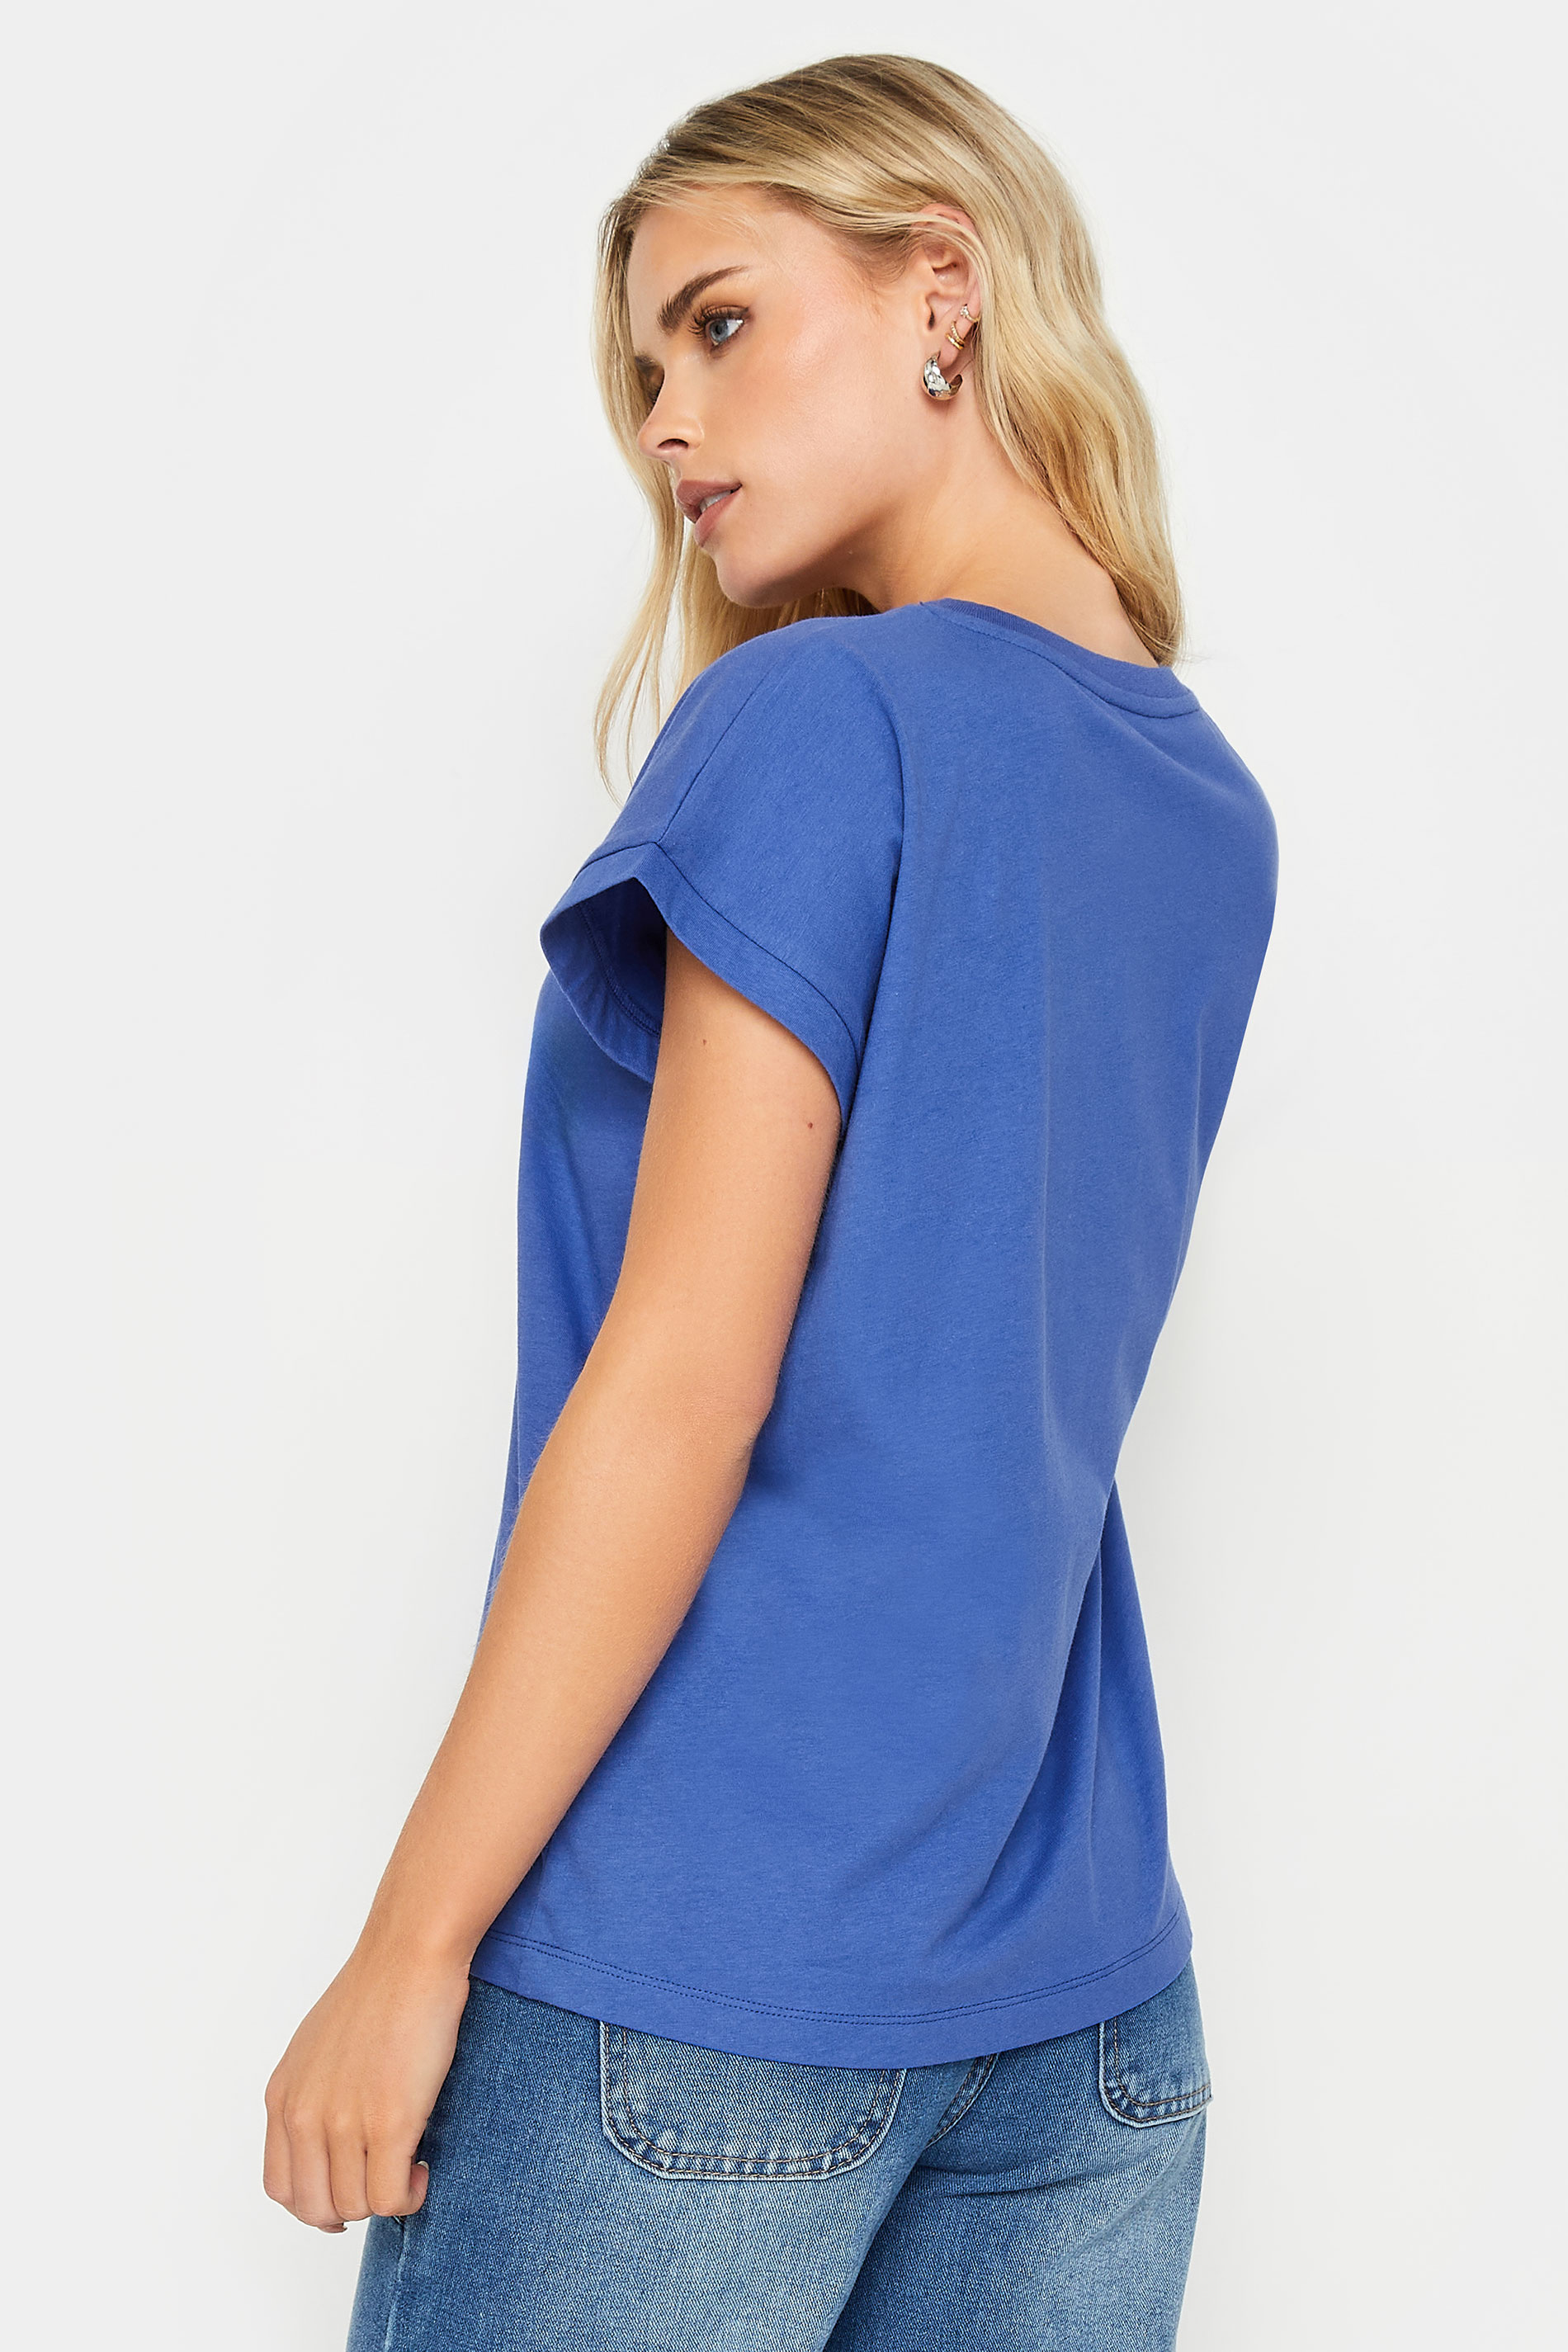 PixieGirl Petite Women's Blue Short Sleeve T-Shirt | PixieGirl 3